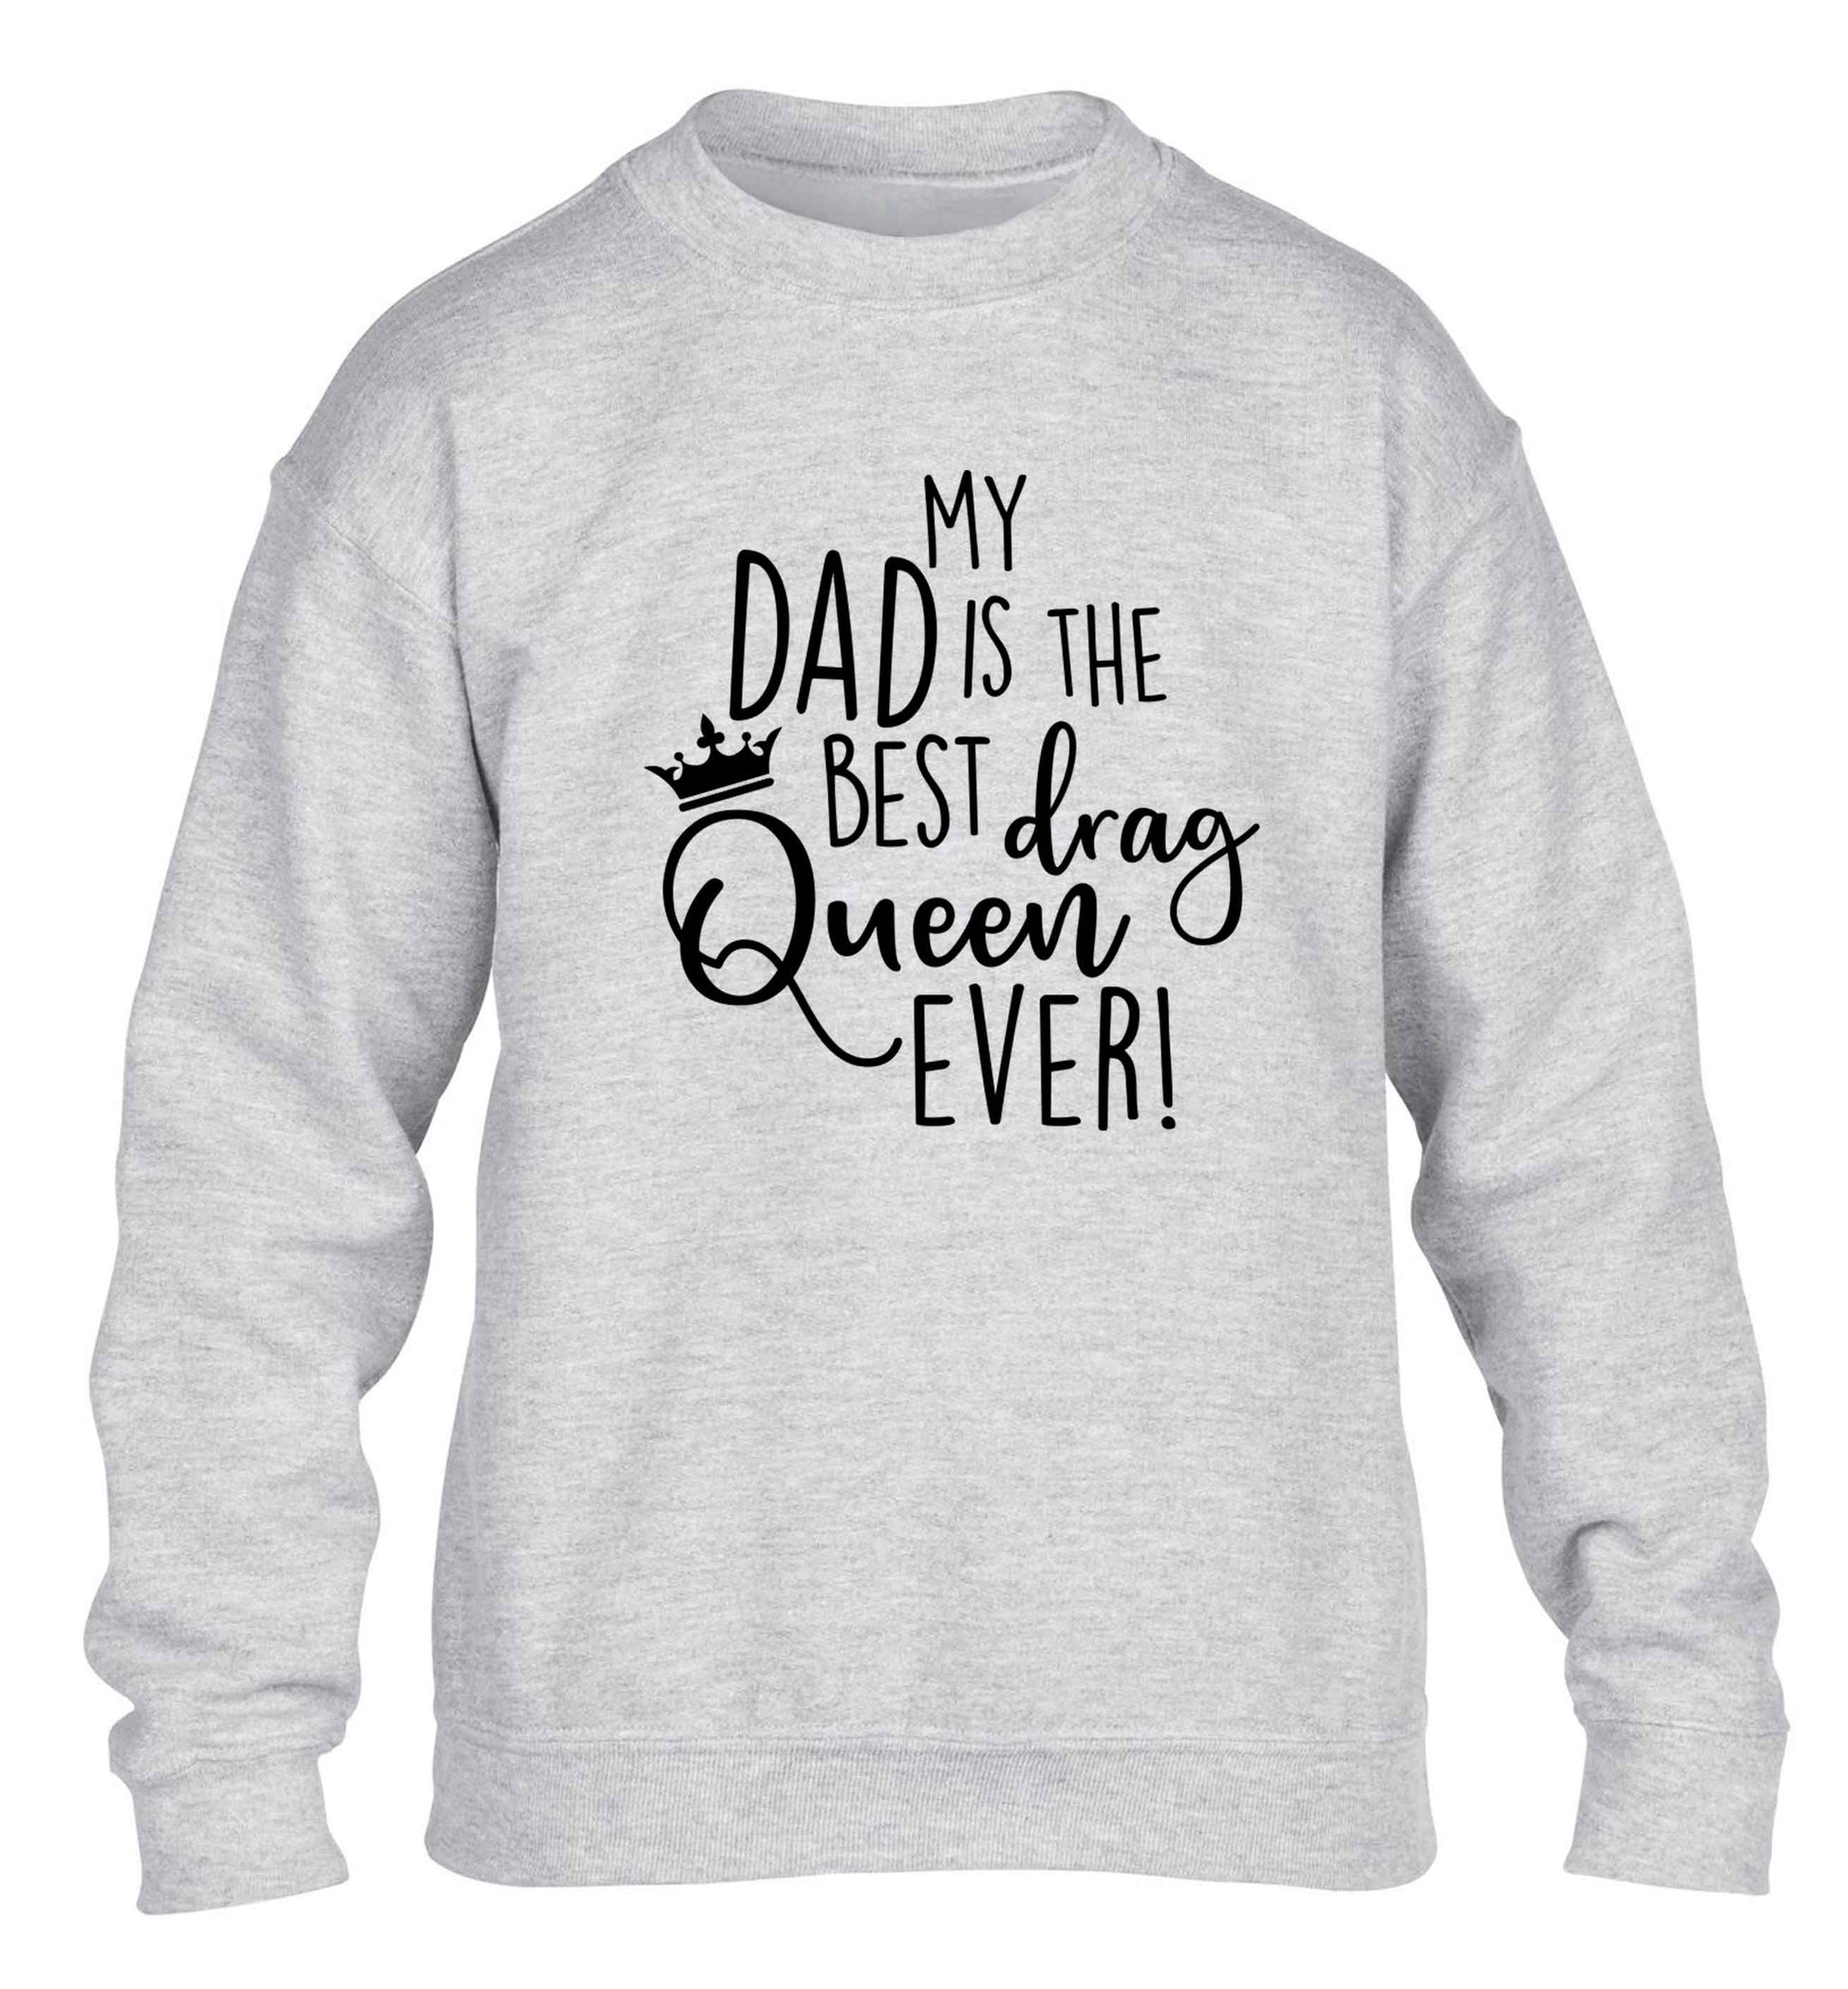 My dad is the best drag Queen ever children's grey sweater 12-13 Years